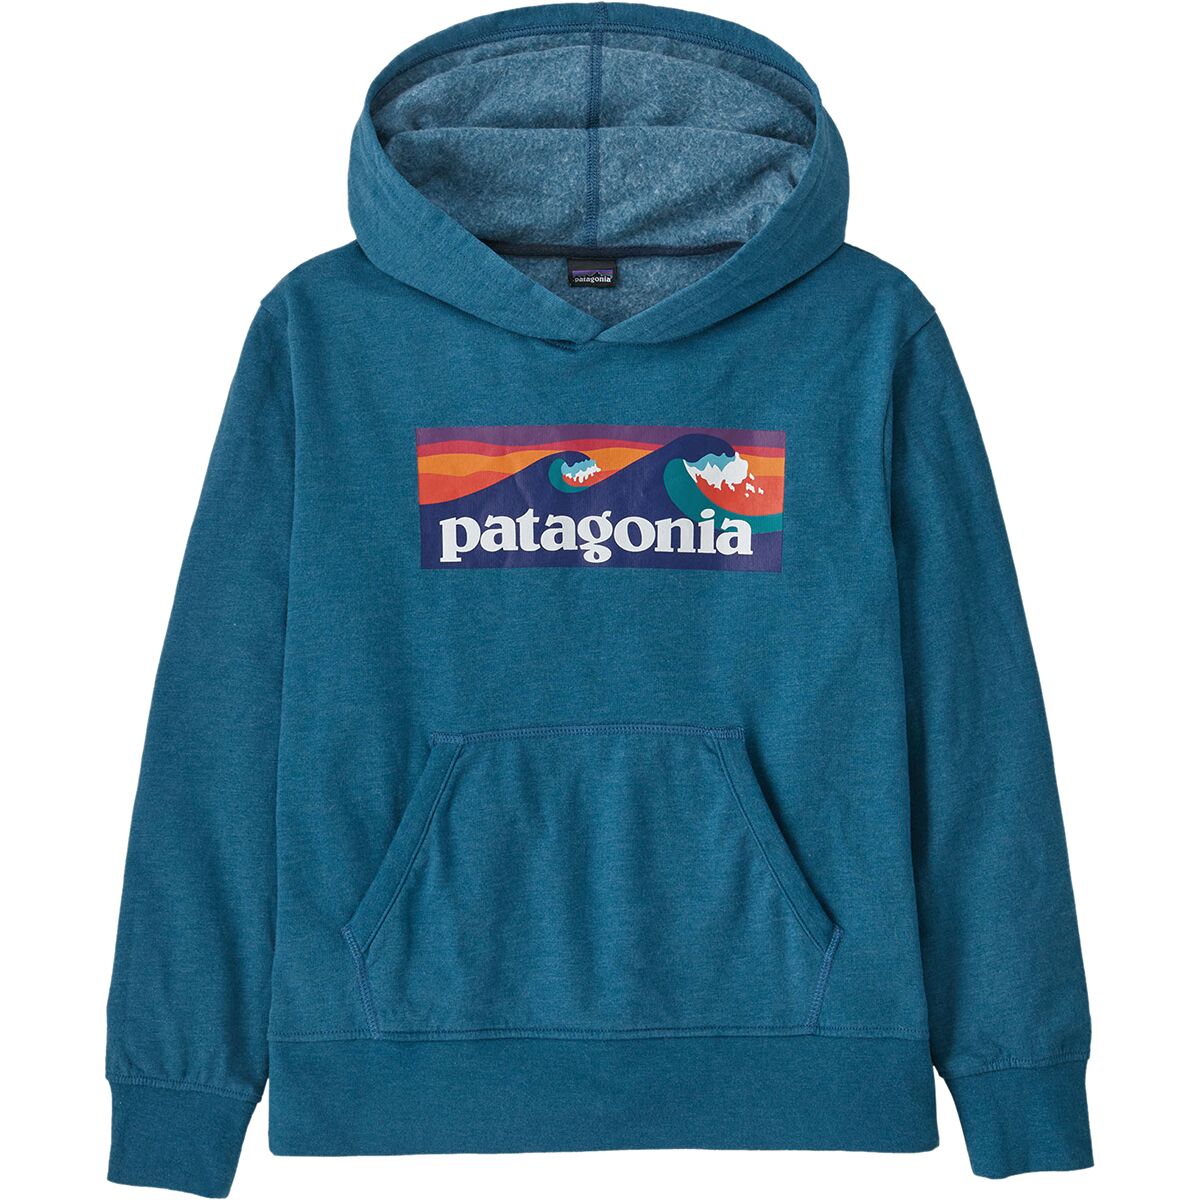 Patagonia Lightweight Graphic Hoodie Sweatshirt - Boys'